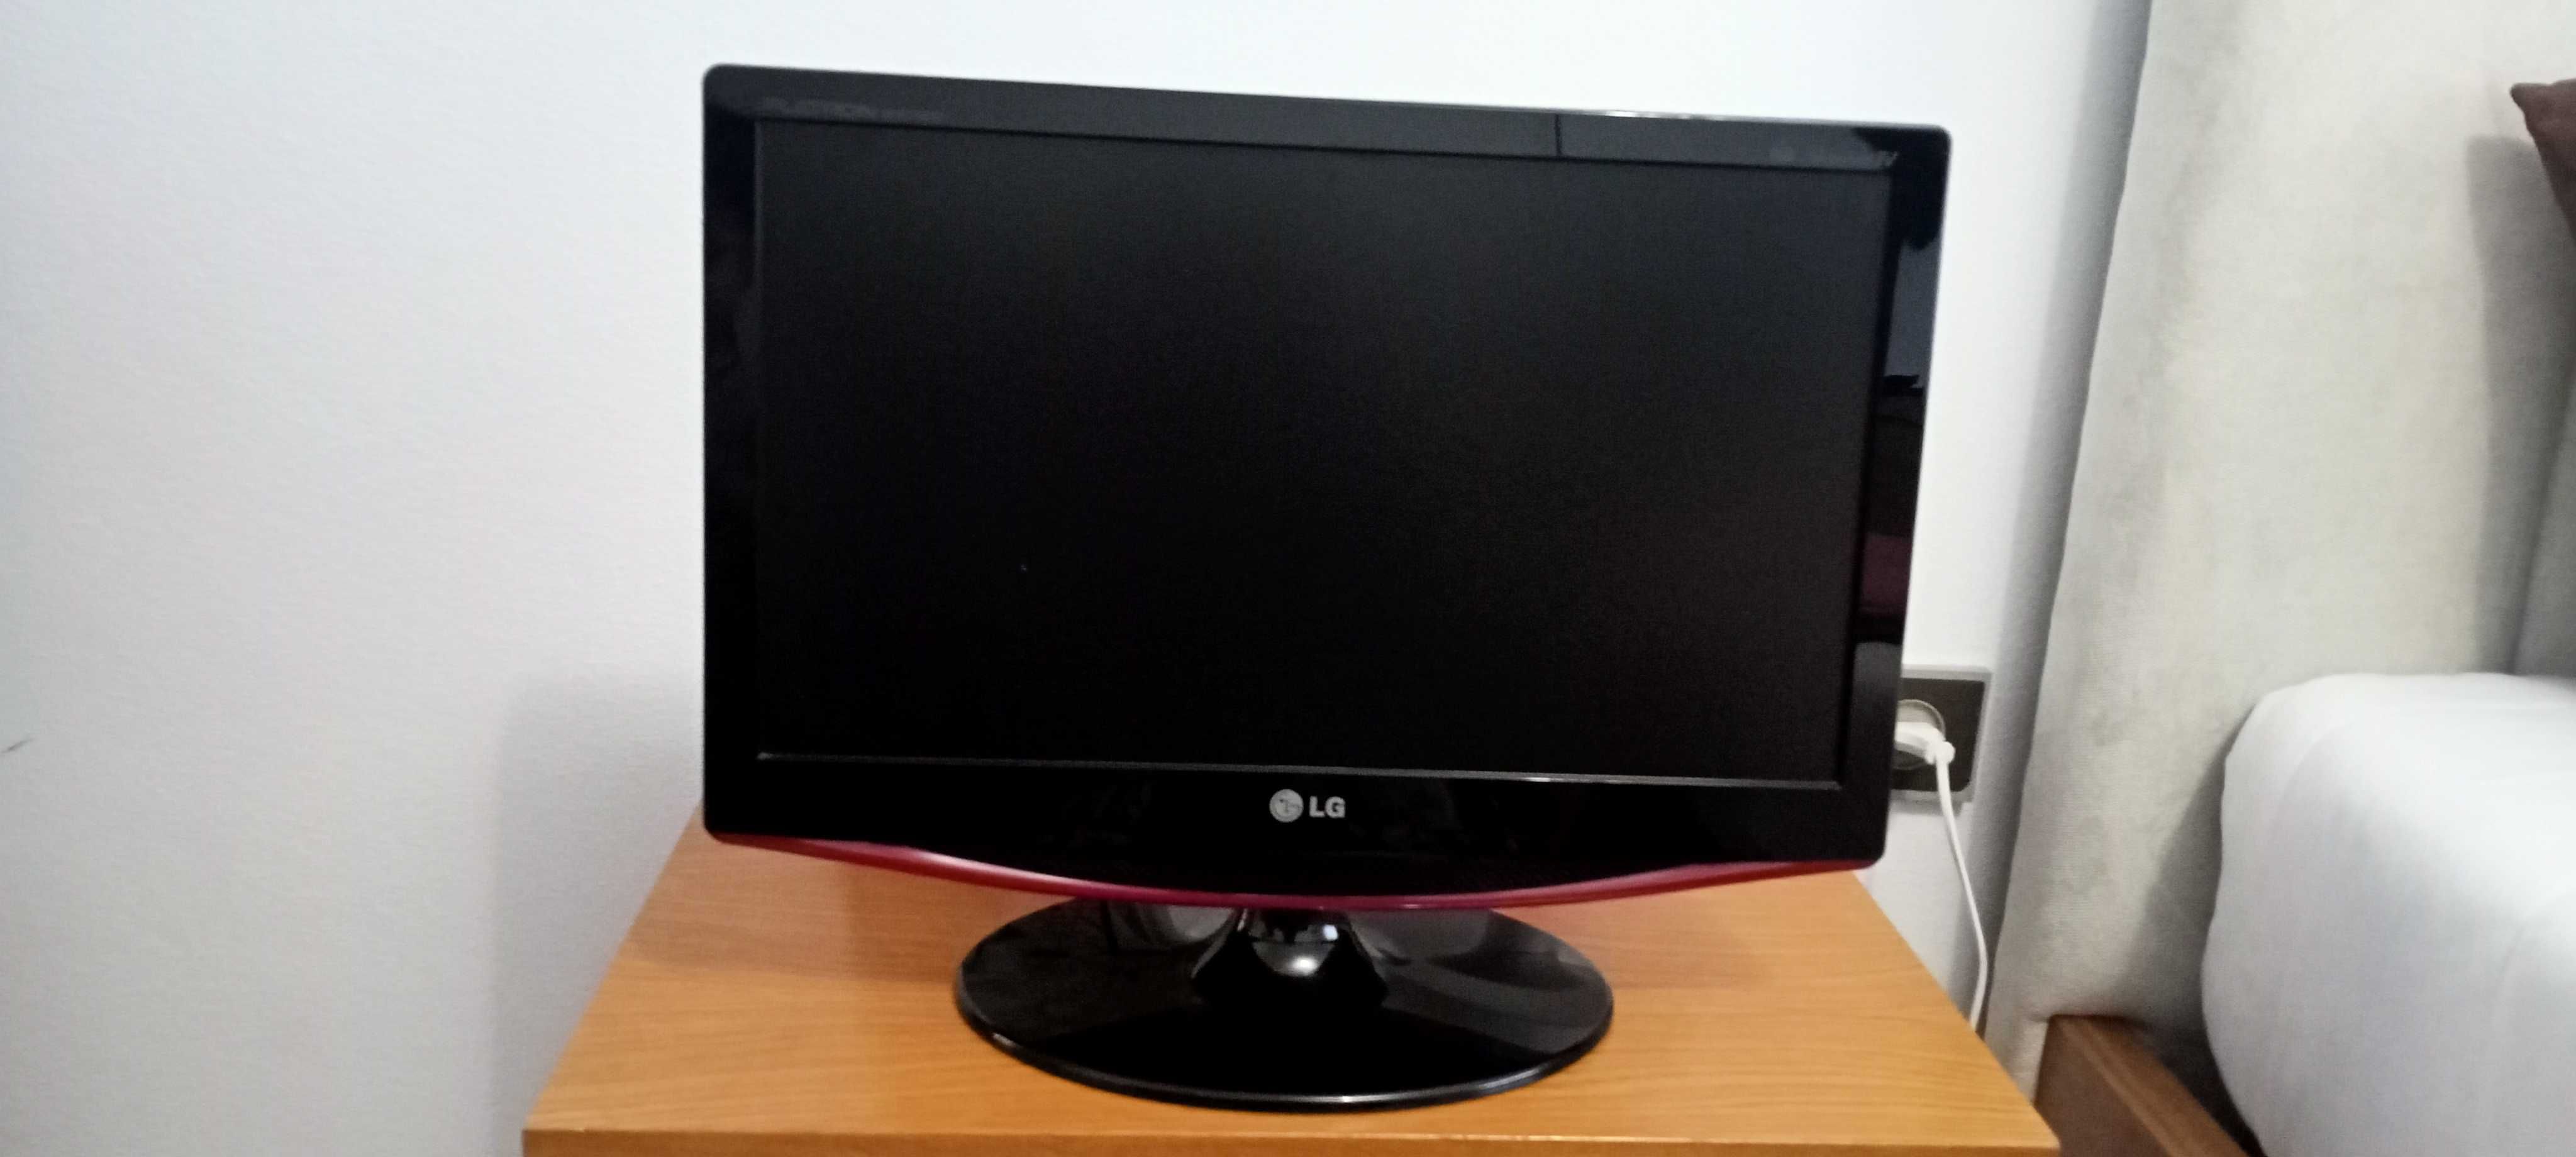 Monitor PC e Tv LG